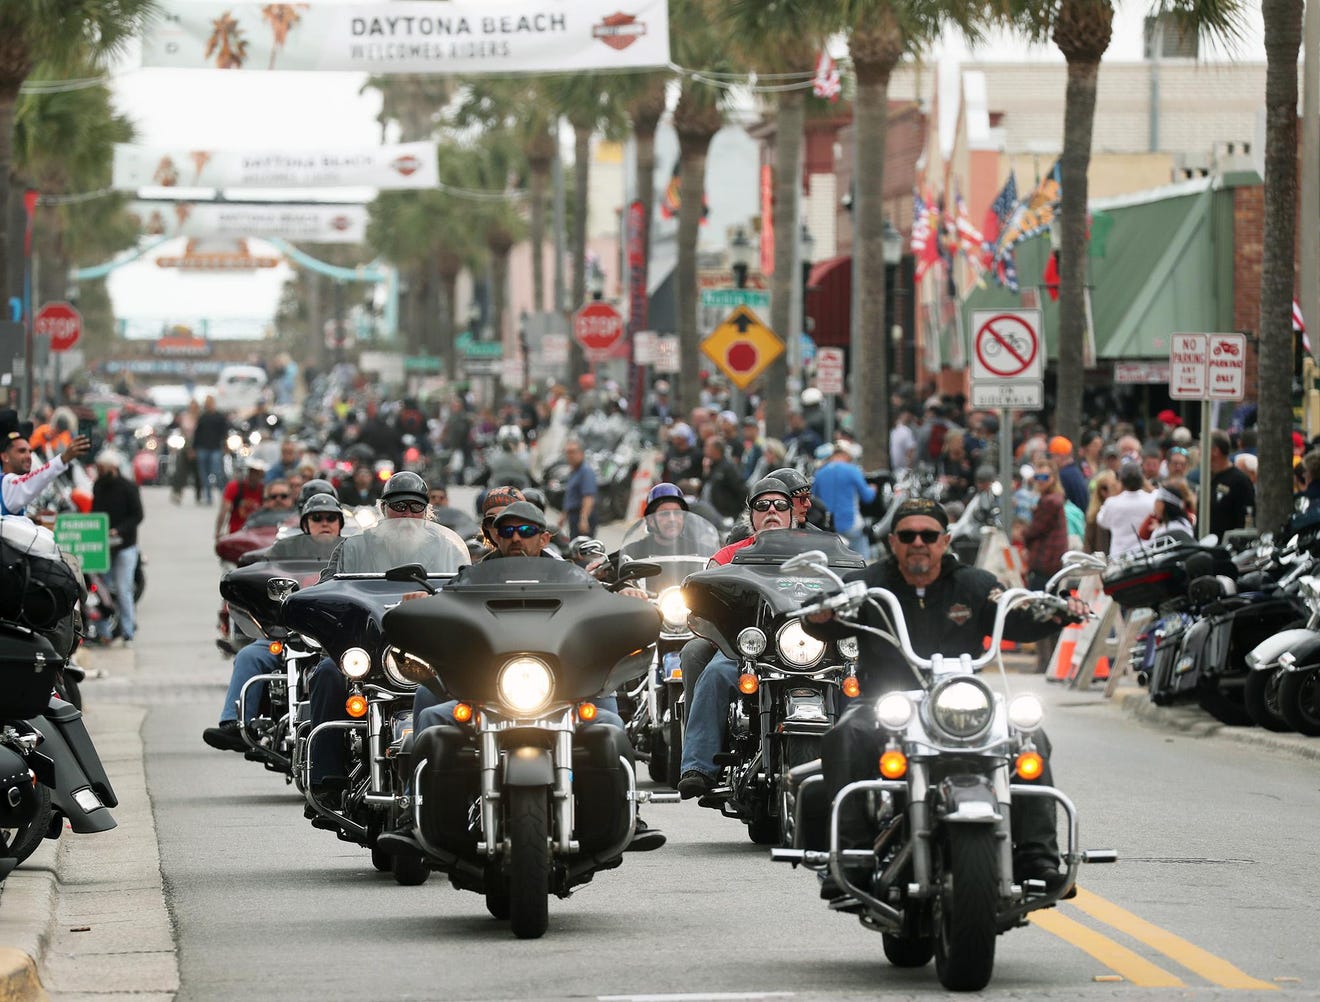 Daytona Beach Bike Week decisions will be made amid COVID concerns